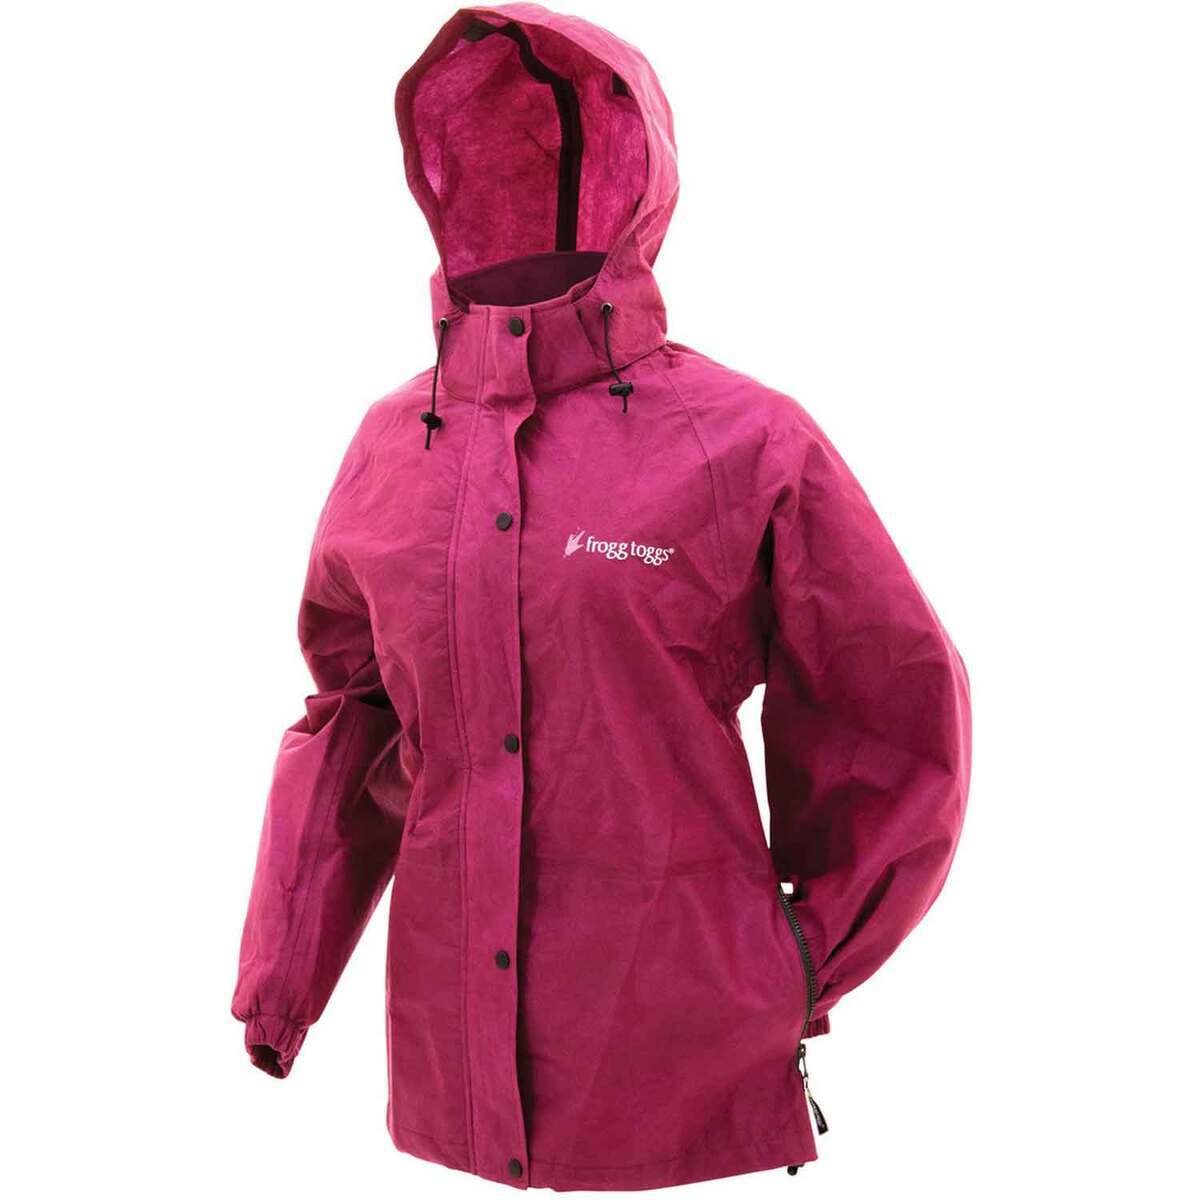 https://www.sportsmans.com/medias/frogg-toggs-womens-classic-pro-action-waterproof-rain-jacket-black-cherry-s-1447878-1.jpg?context=bWFzdGVyfGltYWdlc3w1OTE3OHxpbWFnZS9qcGVnfGFEZGtMMmcyTXk4eE1EQTVNakl4TnpFM01UazVPQzh4TkRRM09EYzRMVEZmWW1GelpTMWpiMjUyWlhKemFXOXVSbTl5YldGMFh6RXlNREF0WTI5dWRtVnljMmx2YmtadmNtMWhkQXwzMWM4NjBhYWM0MTQxZmU3OGYyMzI3YjE4NWFjYWQ3MmI2ZjQ1YmMyYTlkZWY2Zjc1NTllMjIwNzFkNjliNmU0